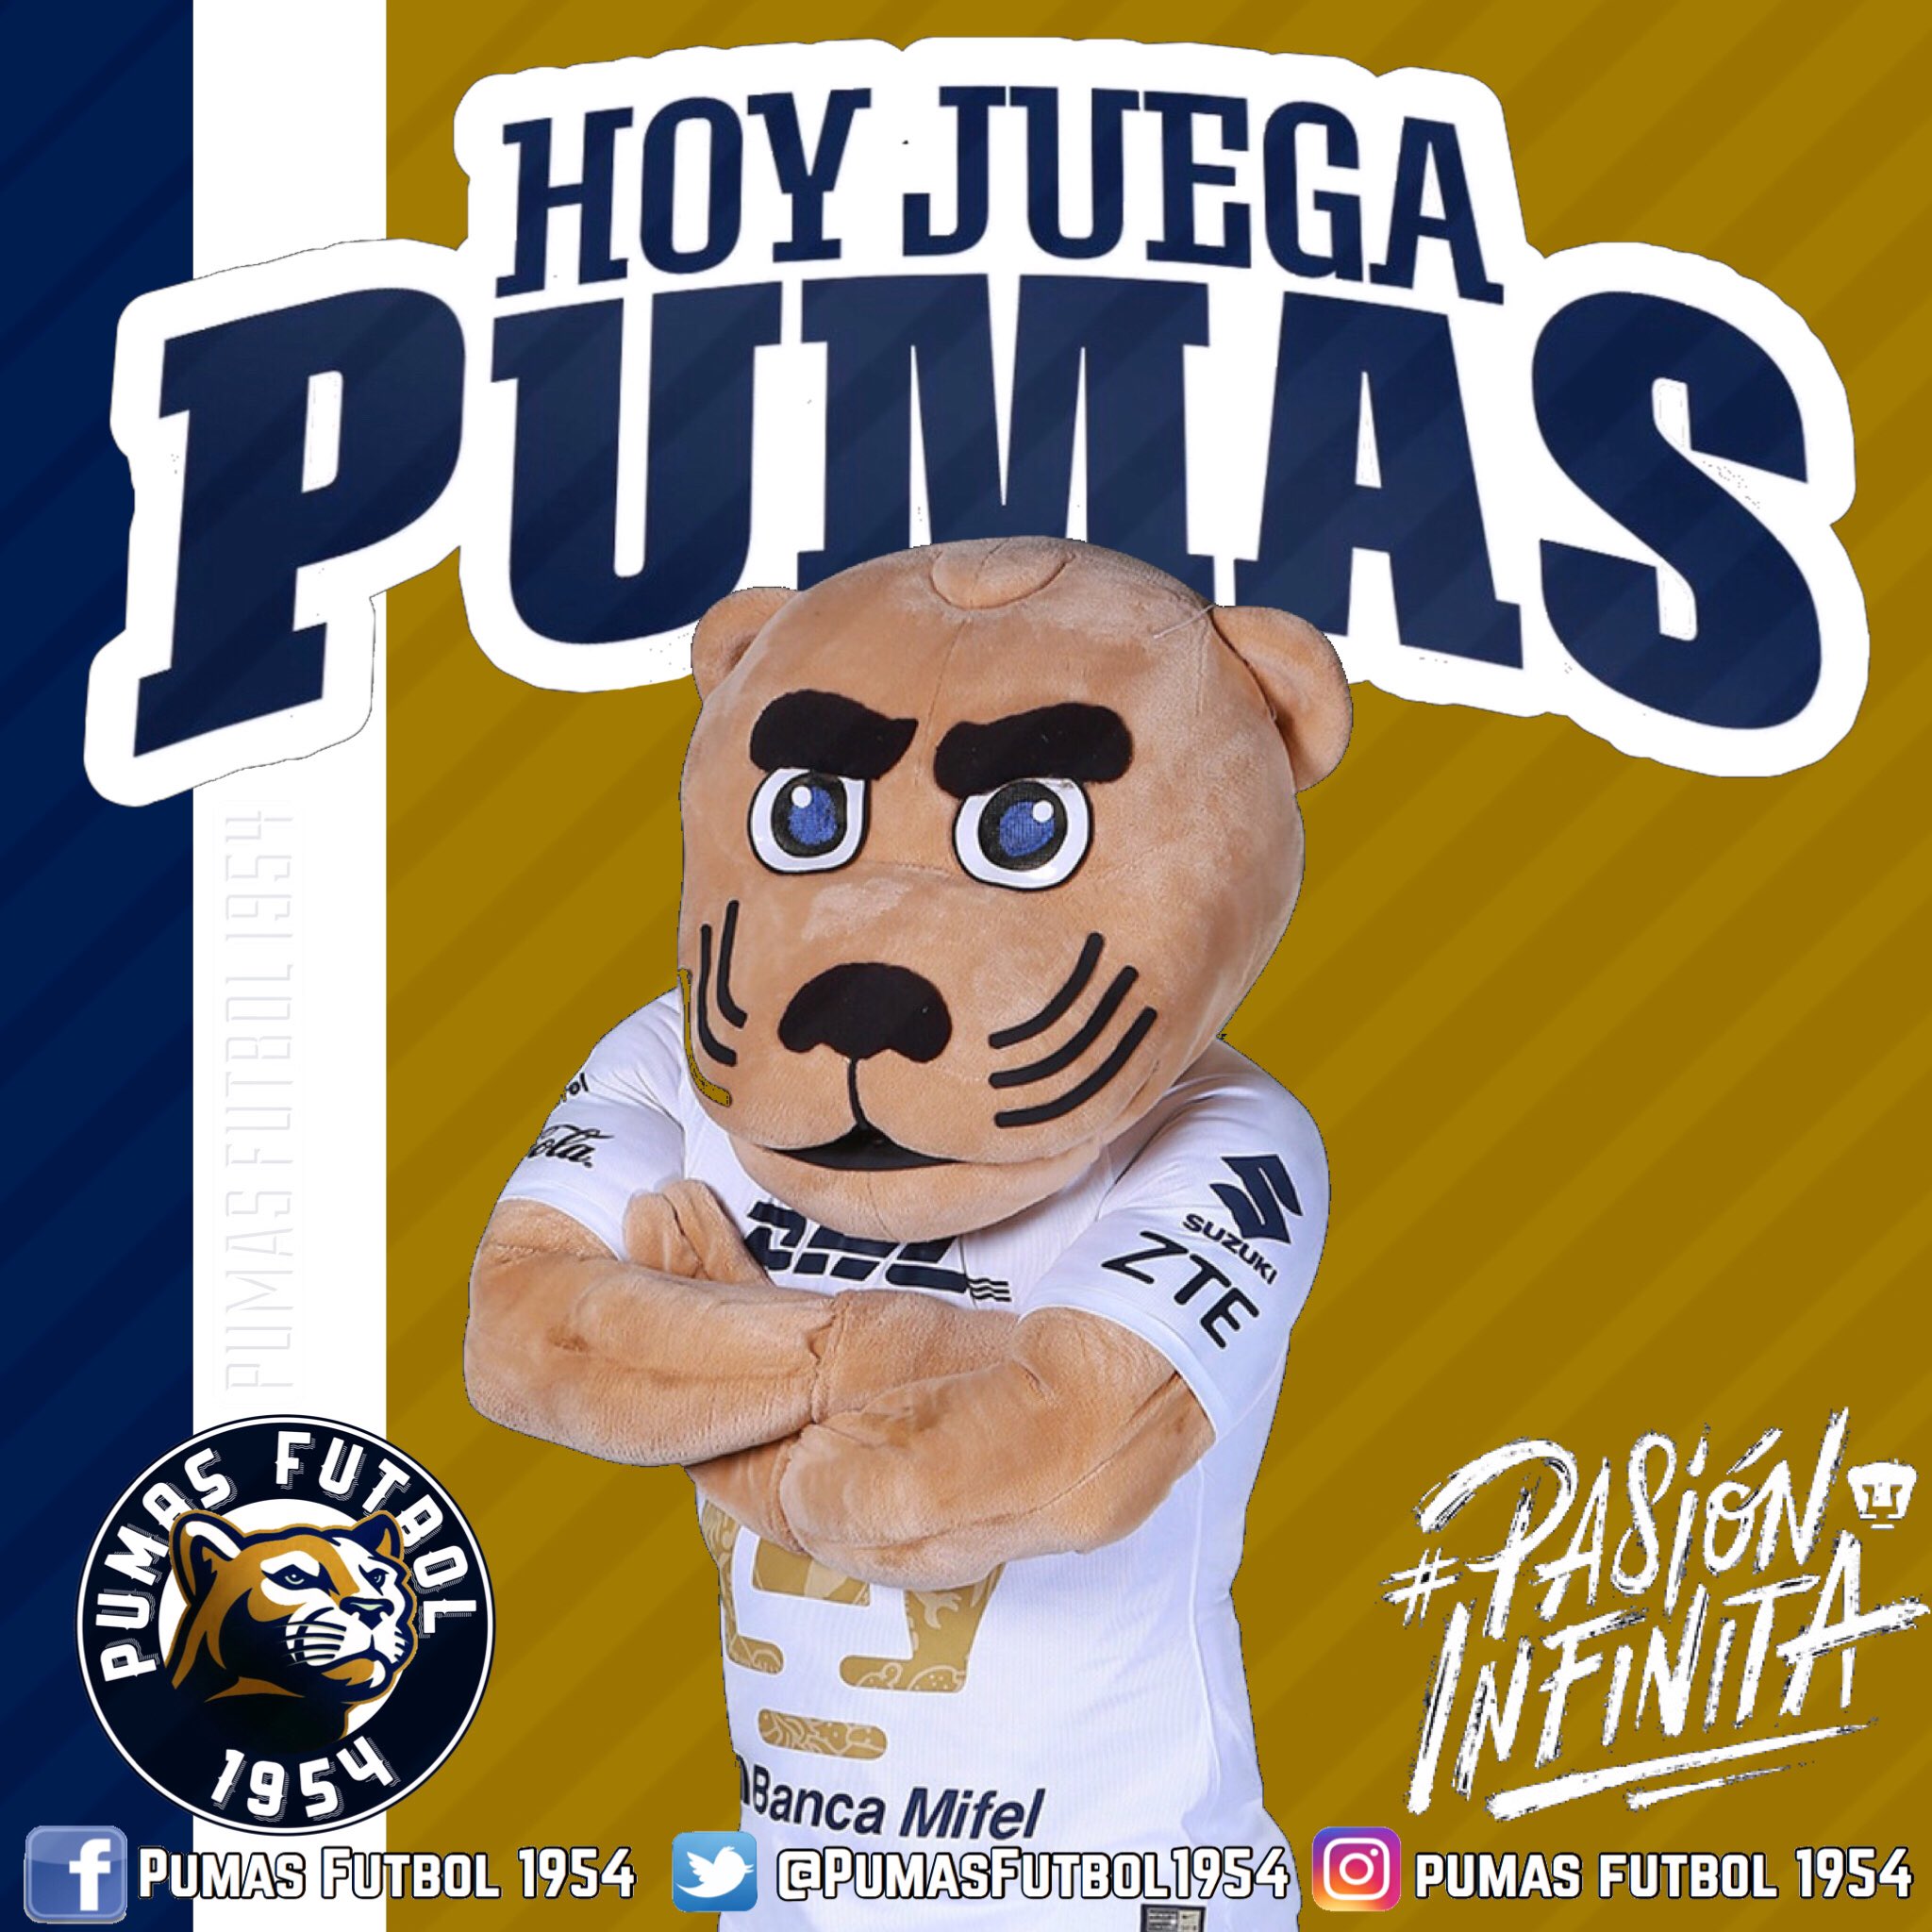 Pumas Futbol 1954 on Twitter: JUEGA PUMAS! Vs Monarcas 🏟Estadio Olímpico Universitario ⏱12:00 🖥TUDN Canal 2 #SoyDePumas #PumasFutbol1954 / Twitter